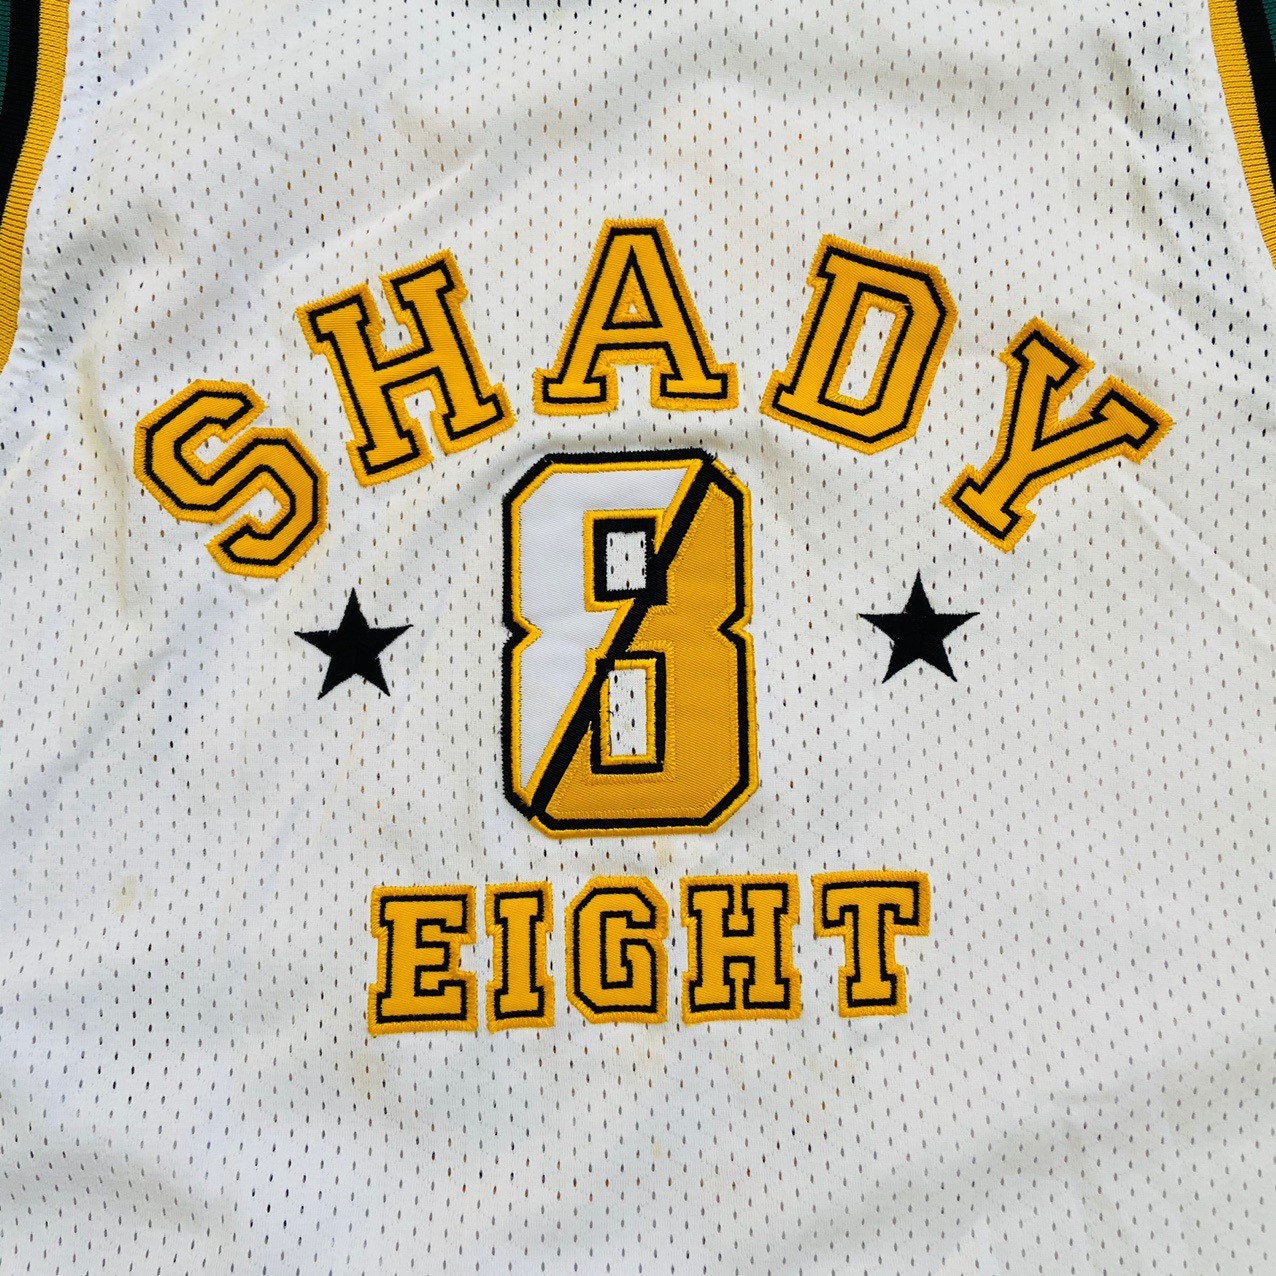 Vintage 90s Shady Limited Sleeveless Basketball Jersey Rapper 